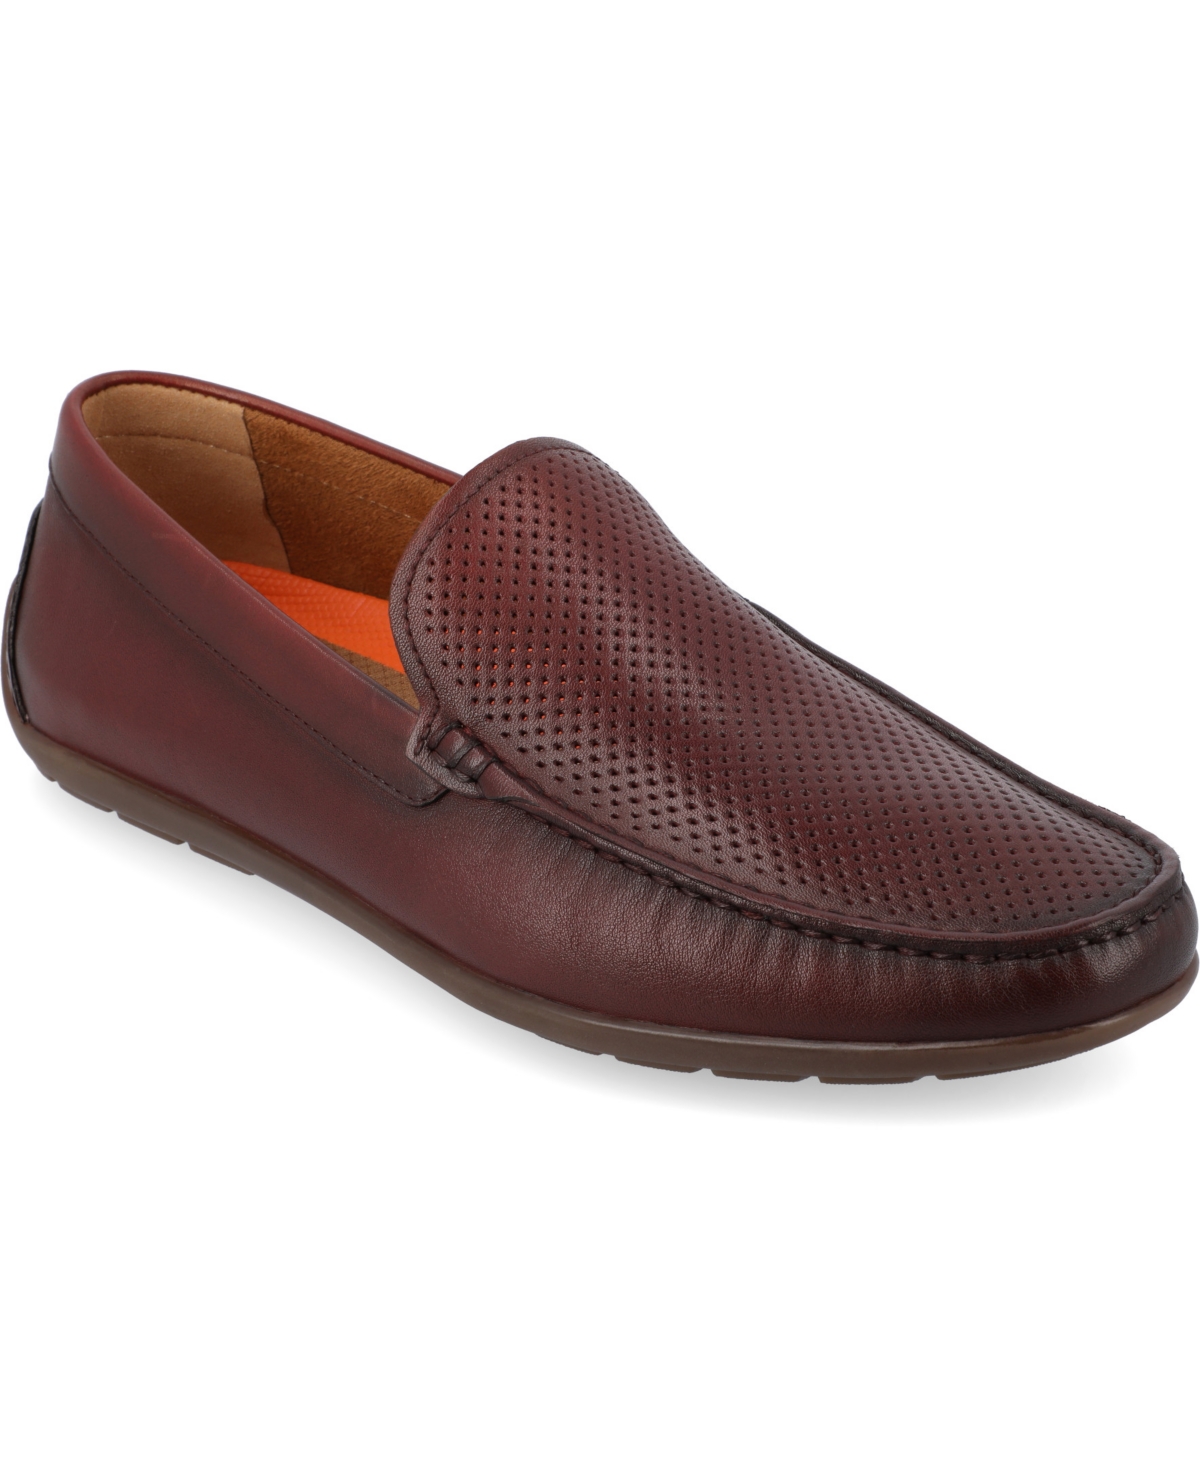 Men's Jaden Tru Comfort Foam Moc Toe Slip-On Driving Loafers - Mahogany